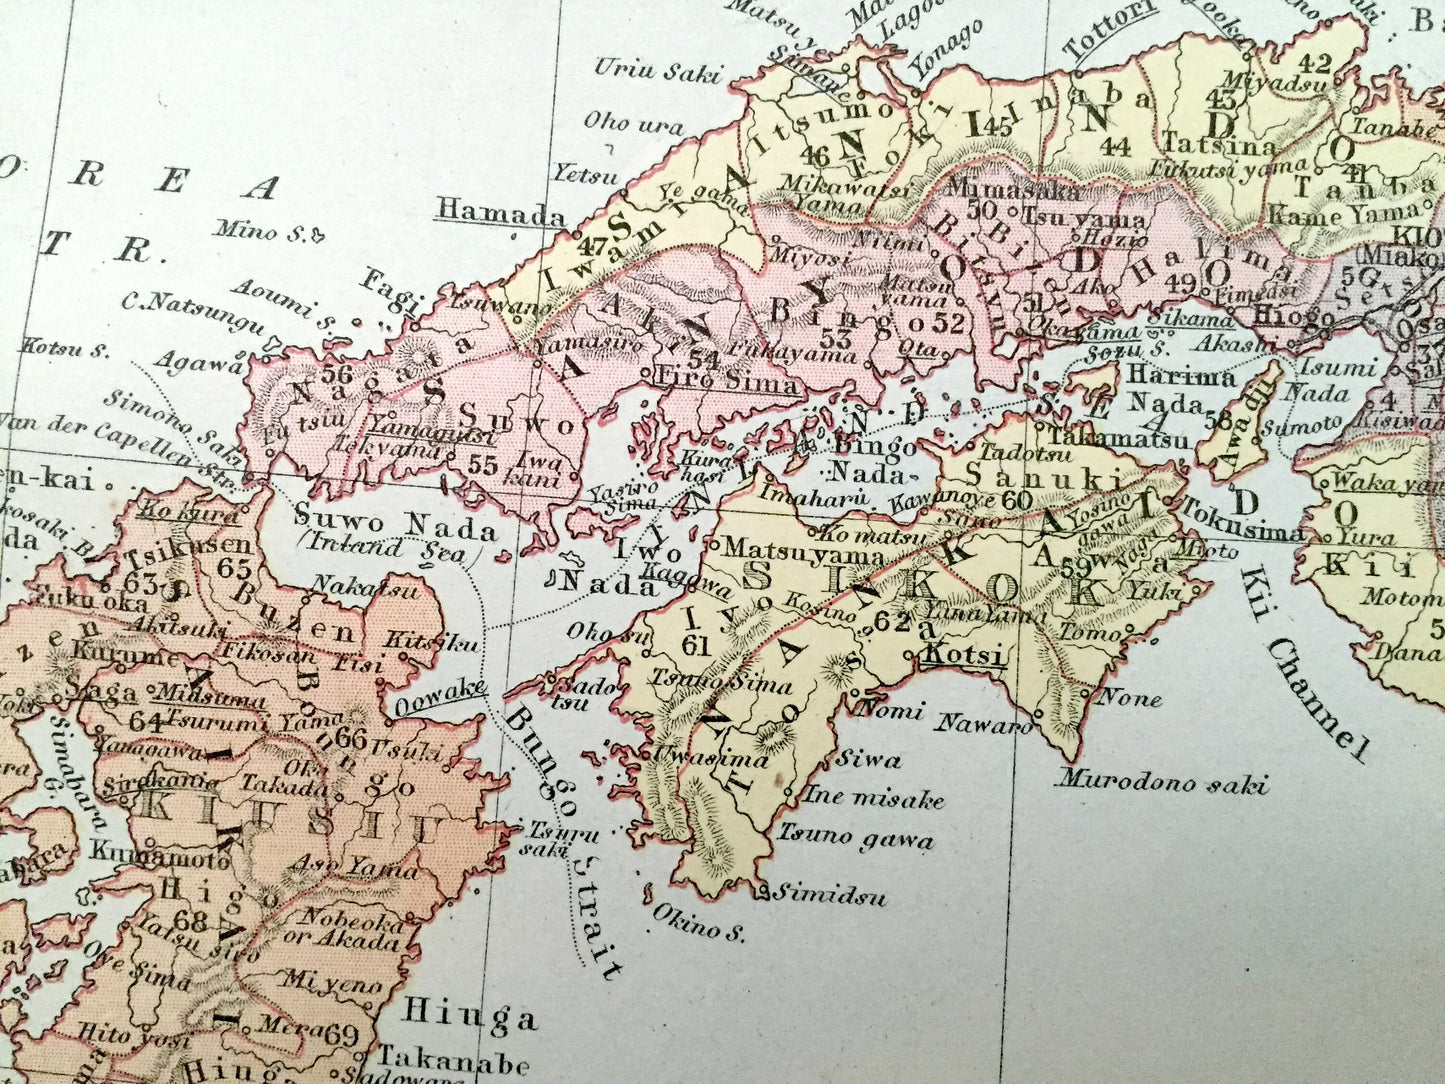 Antique 1888 Japan Map from A & C Black's World Atlas – Korea, Russia, Tokyo, Osaka, Kyoto, Yokohama, Nagoya, Sea of Japan, Gulf of Tartary